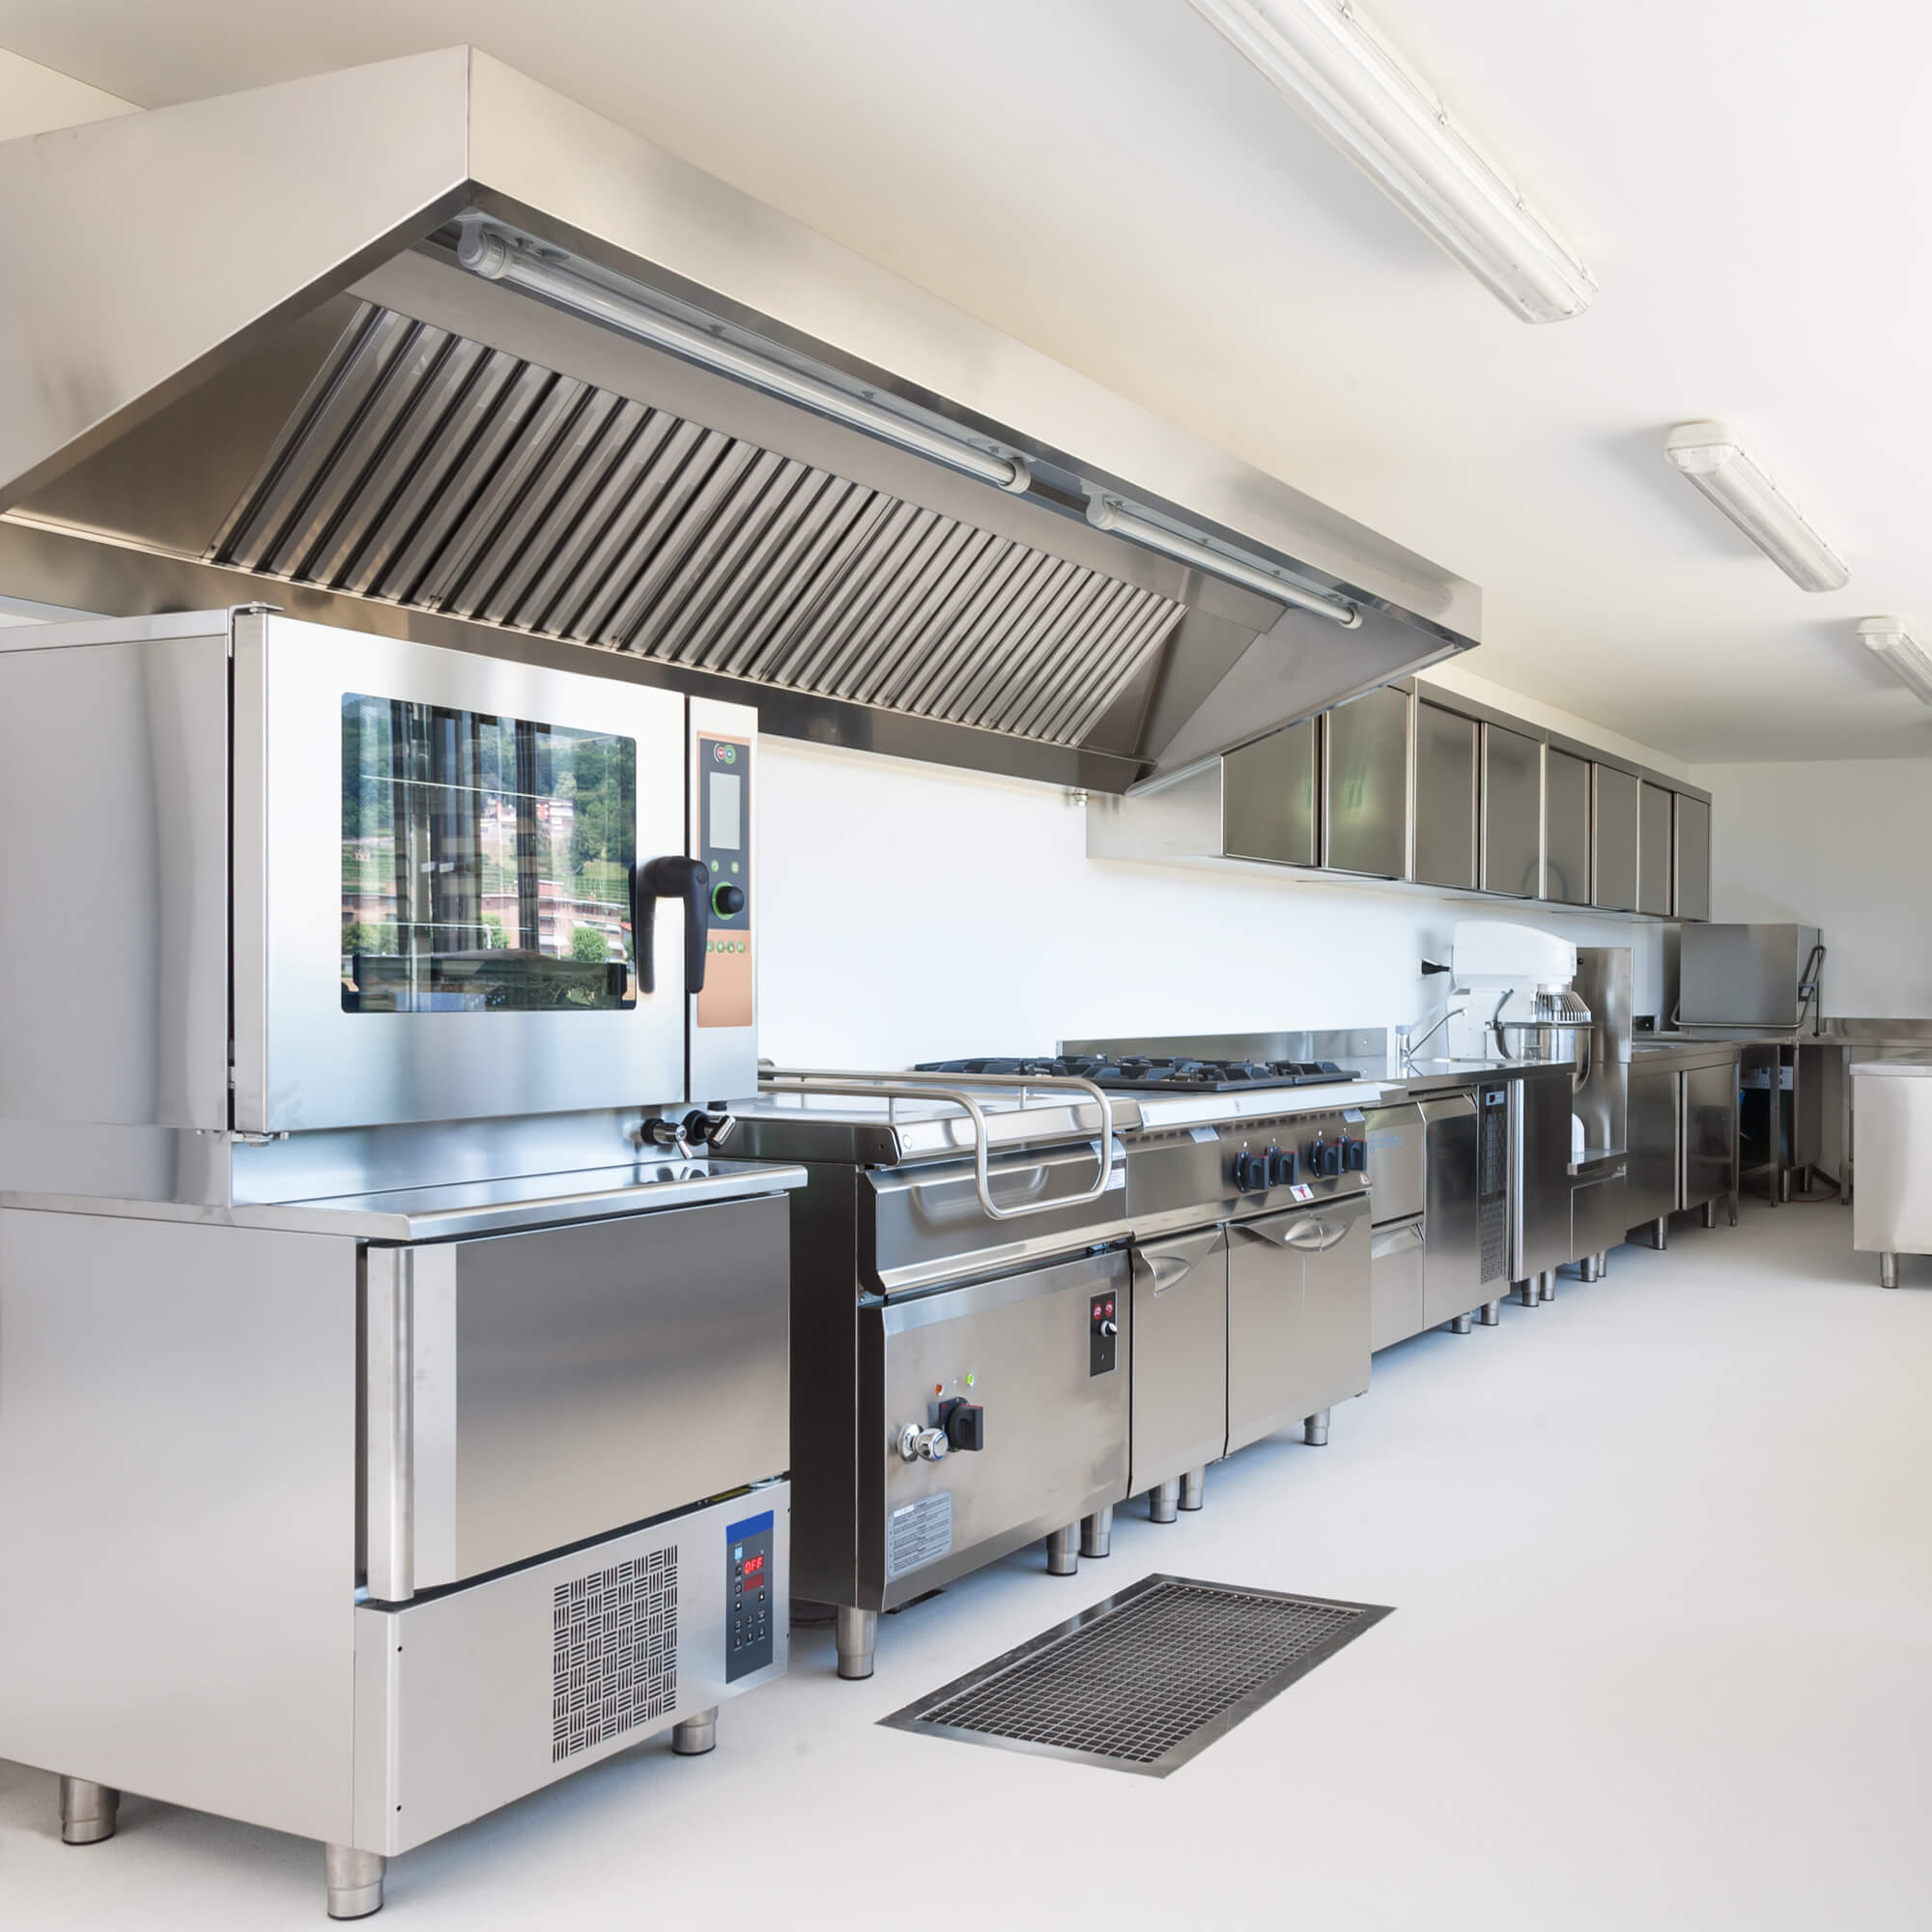 Professional kitchen in modern building in San Diego, California